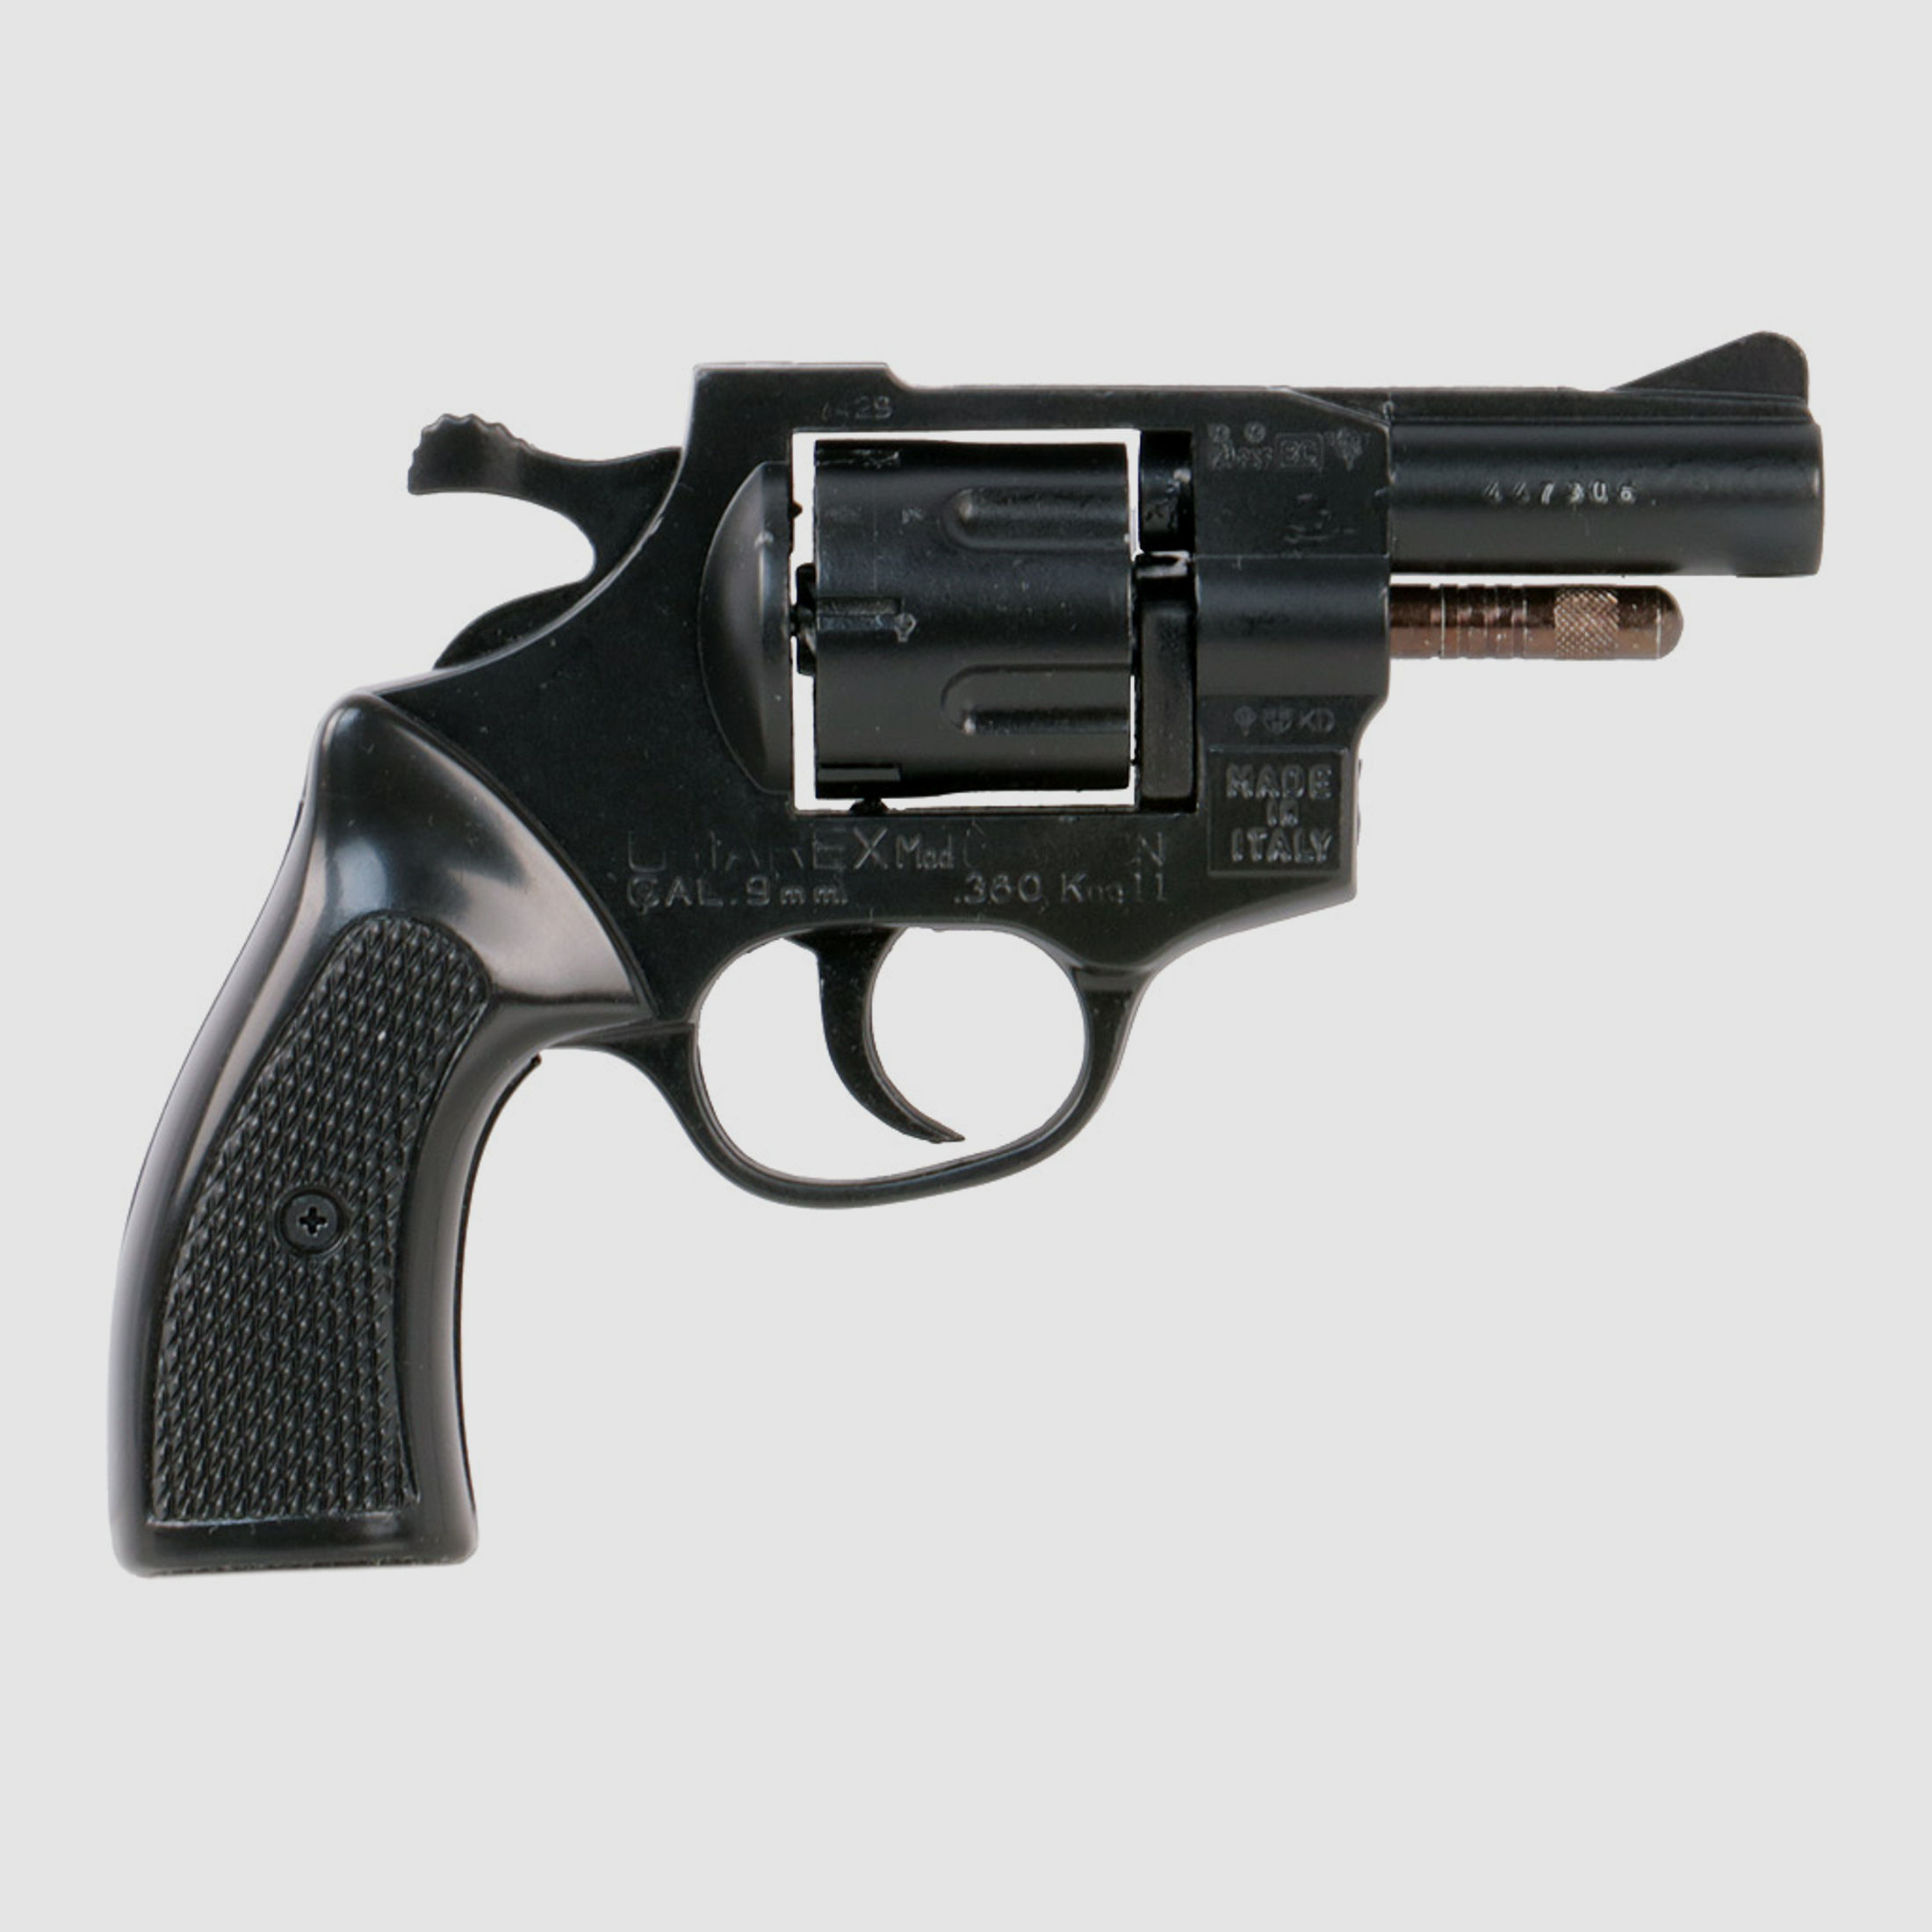 Schreckschuss Revolver Umarex Champion Beschuss 1993 Druckguss schwarz Kaliber 9 mm R.K. (P18)